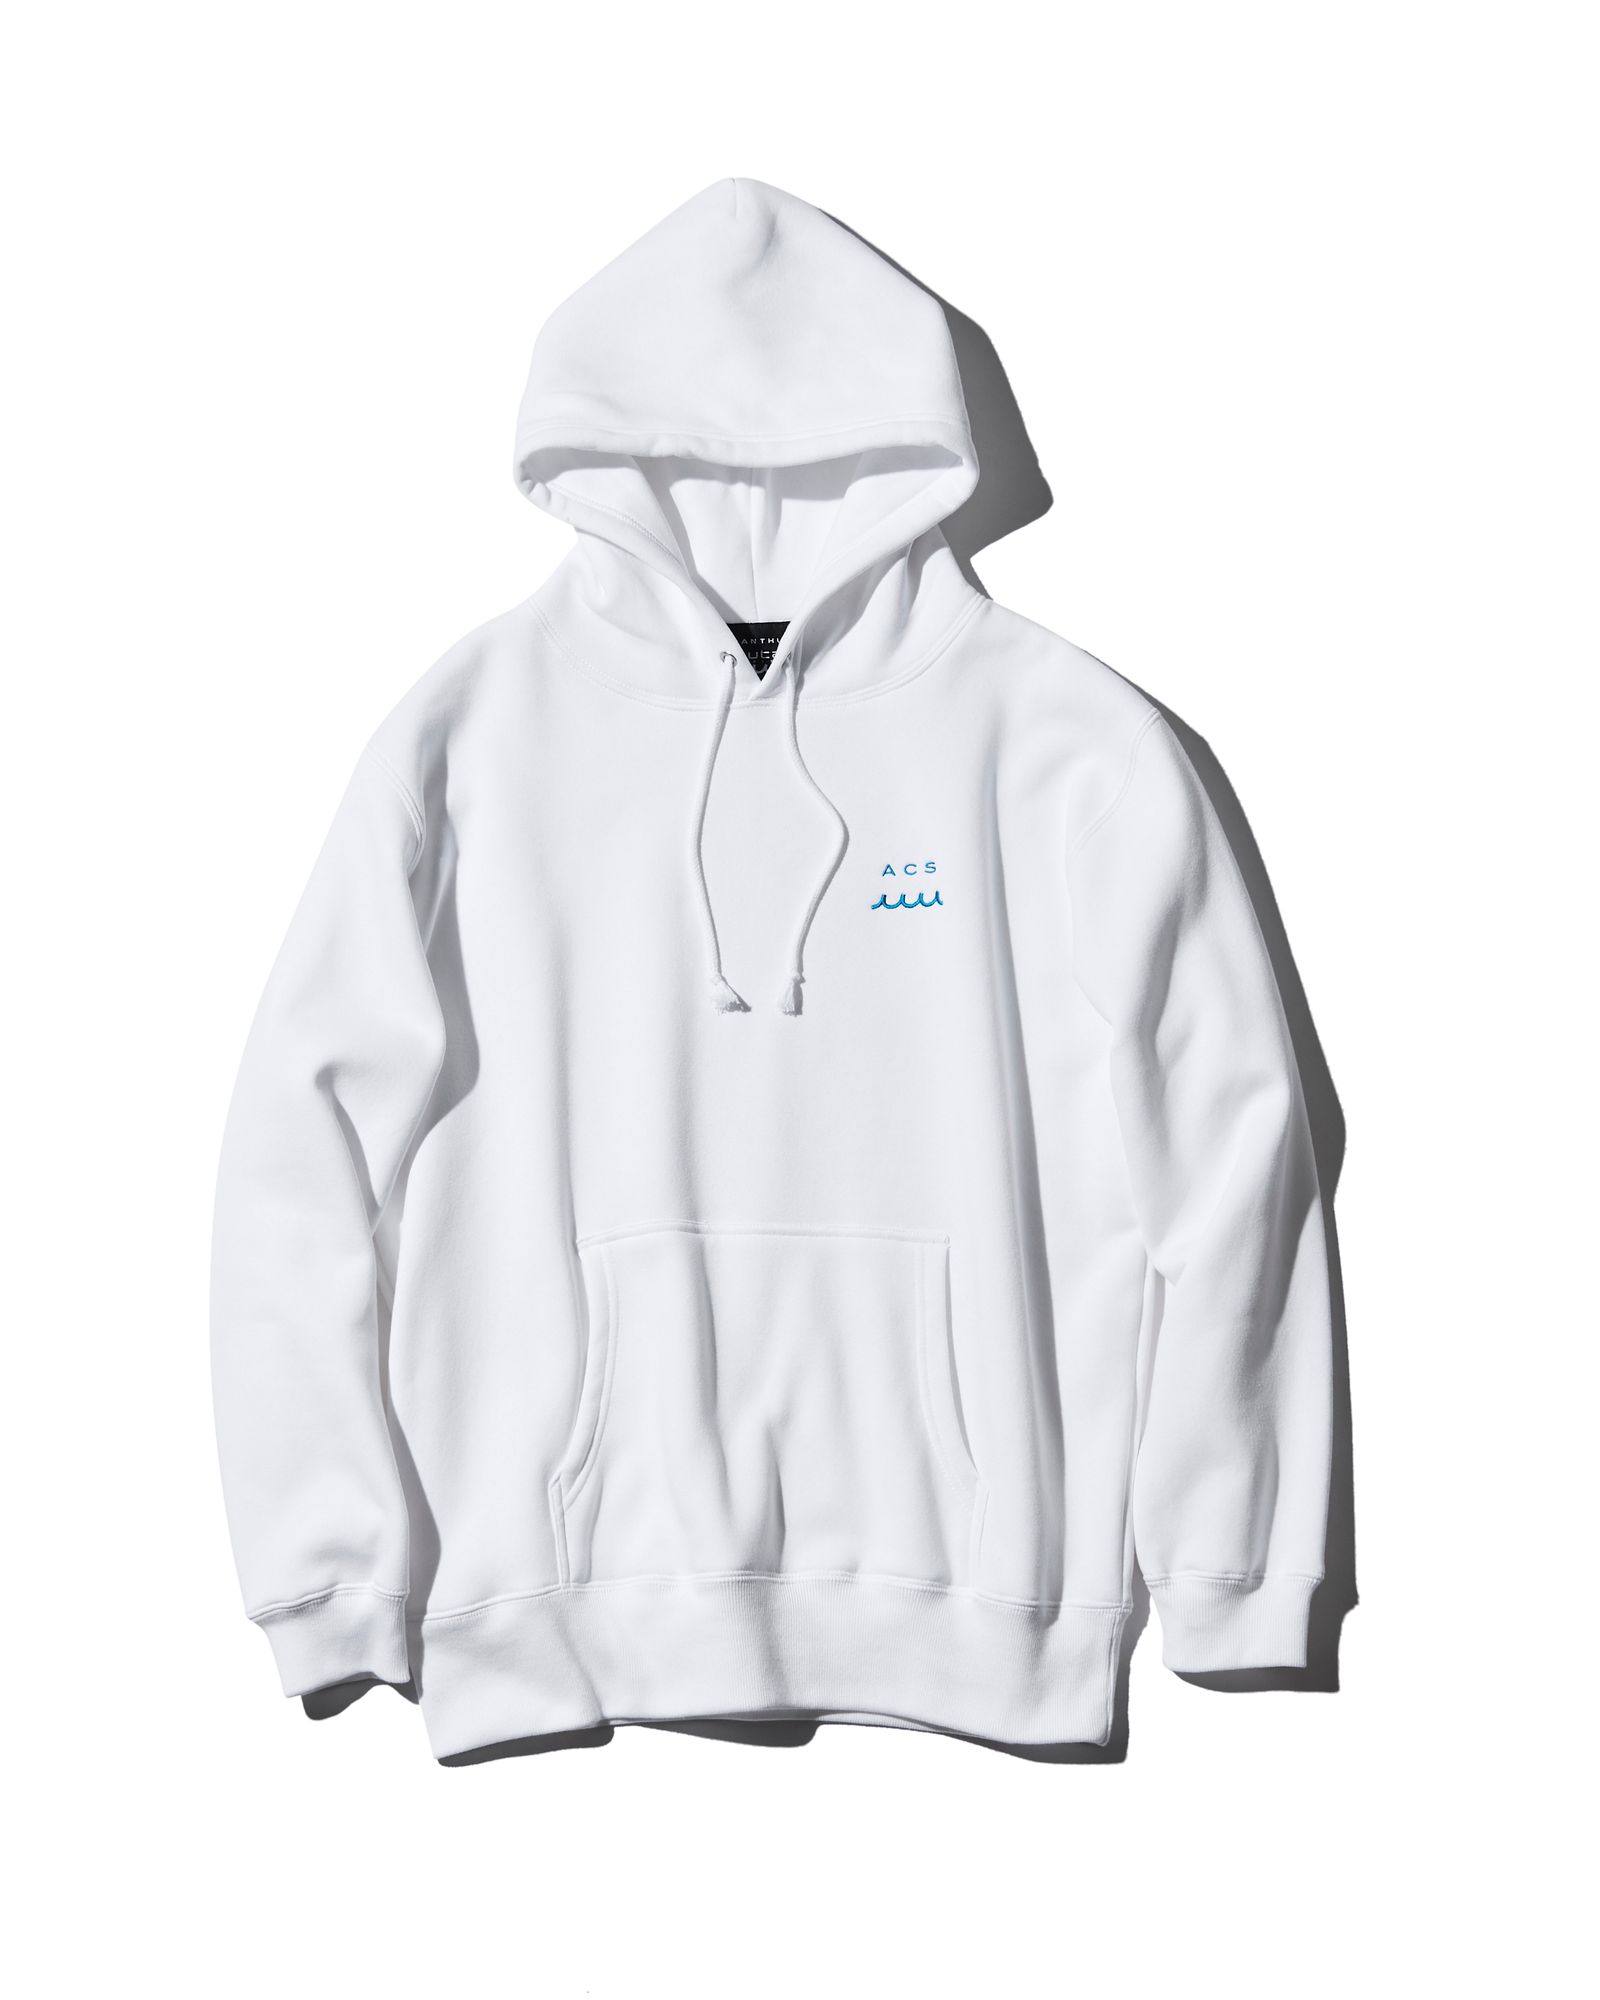 ACANTHUS x muta MARINE / muta Anchor Splash Logo Hooded Sweatshirt / WHITE  - S